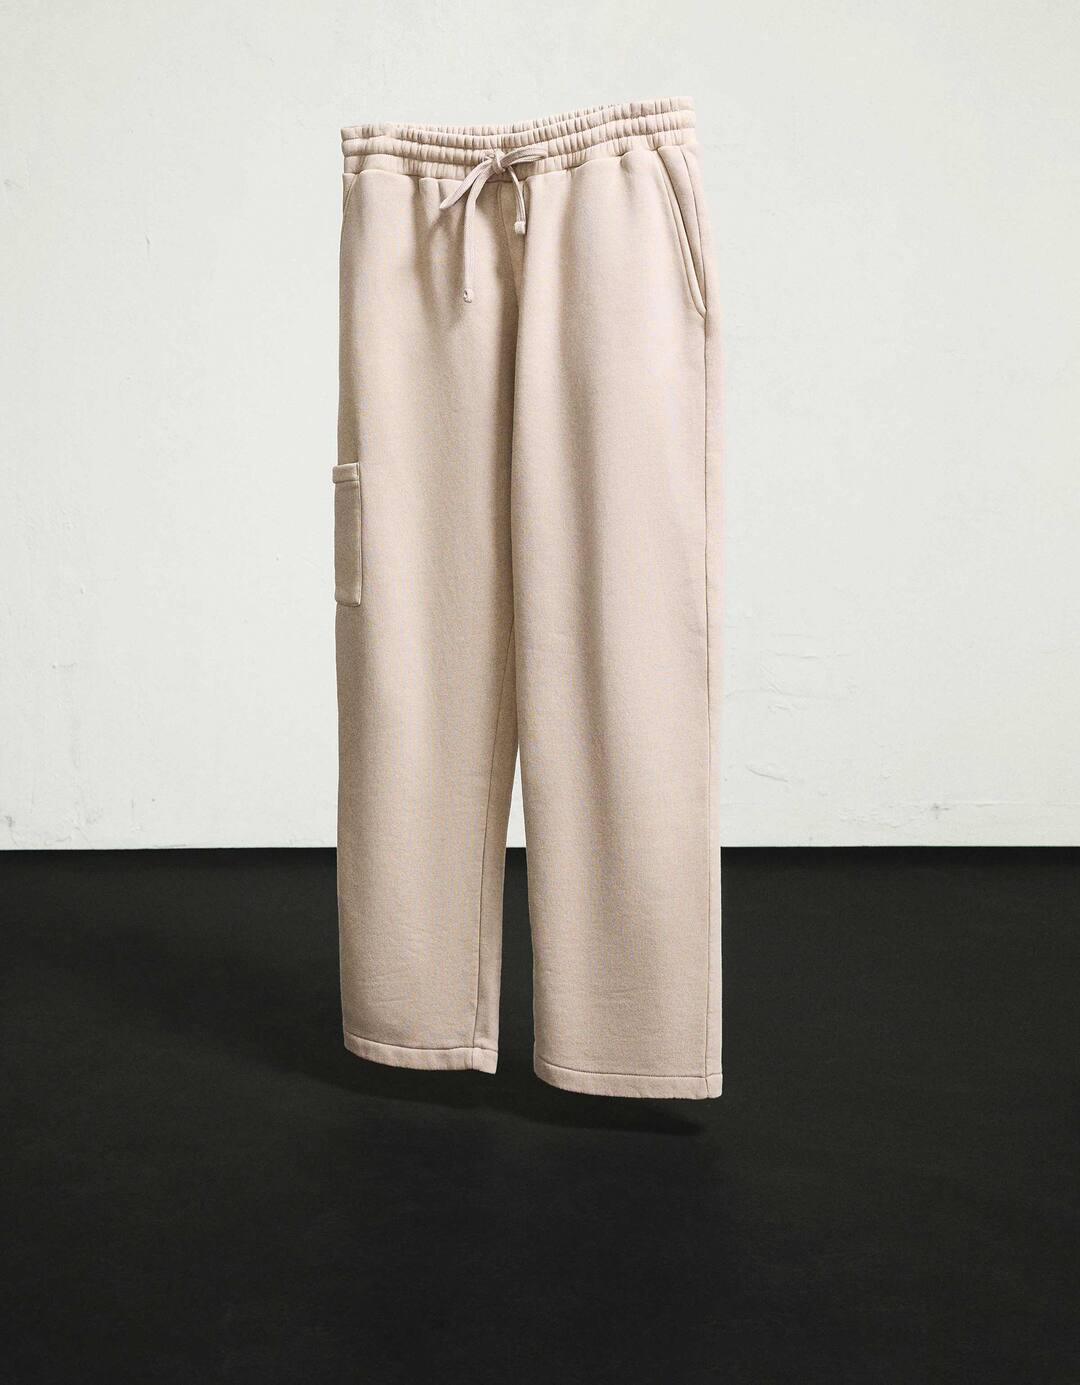 Faded wide-leg cargo trousers